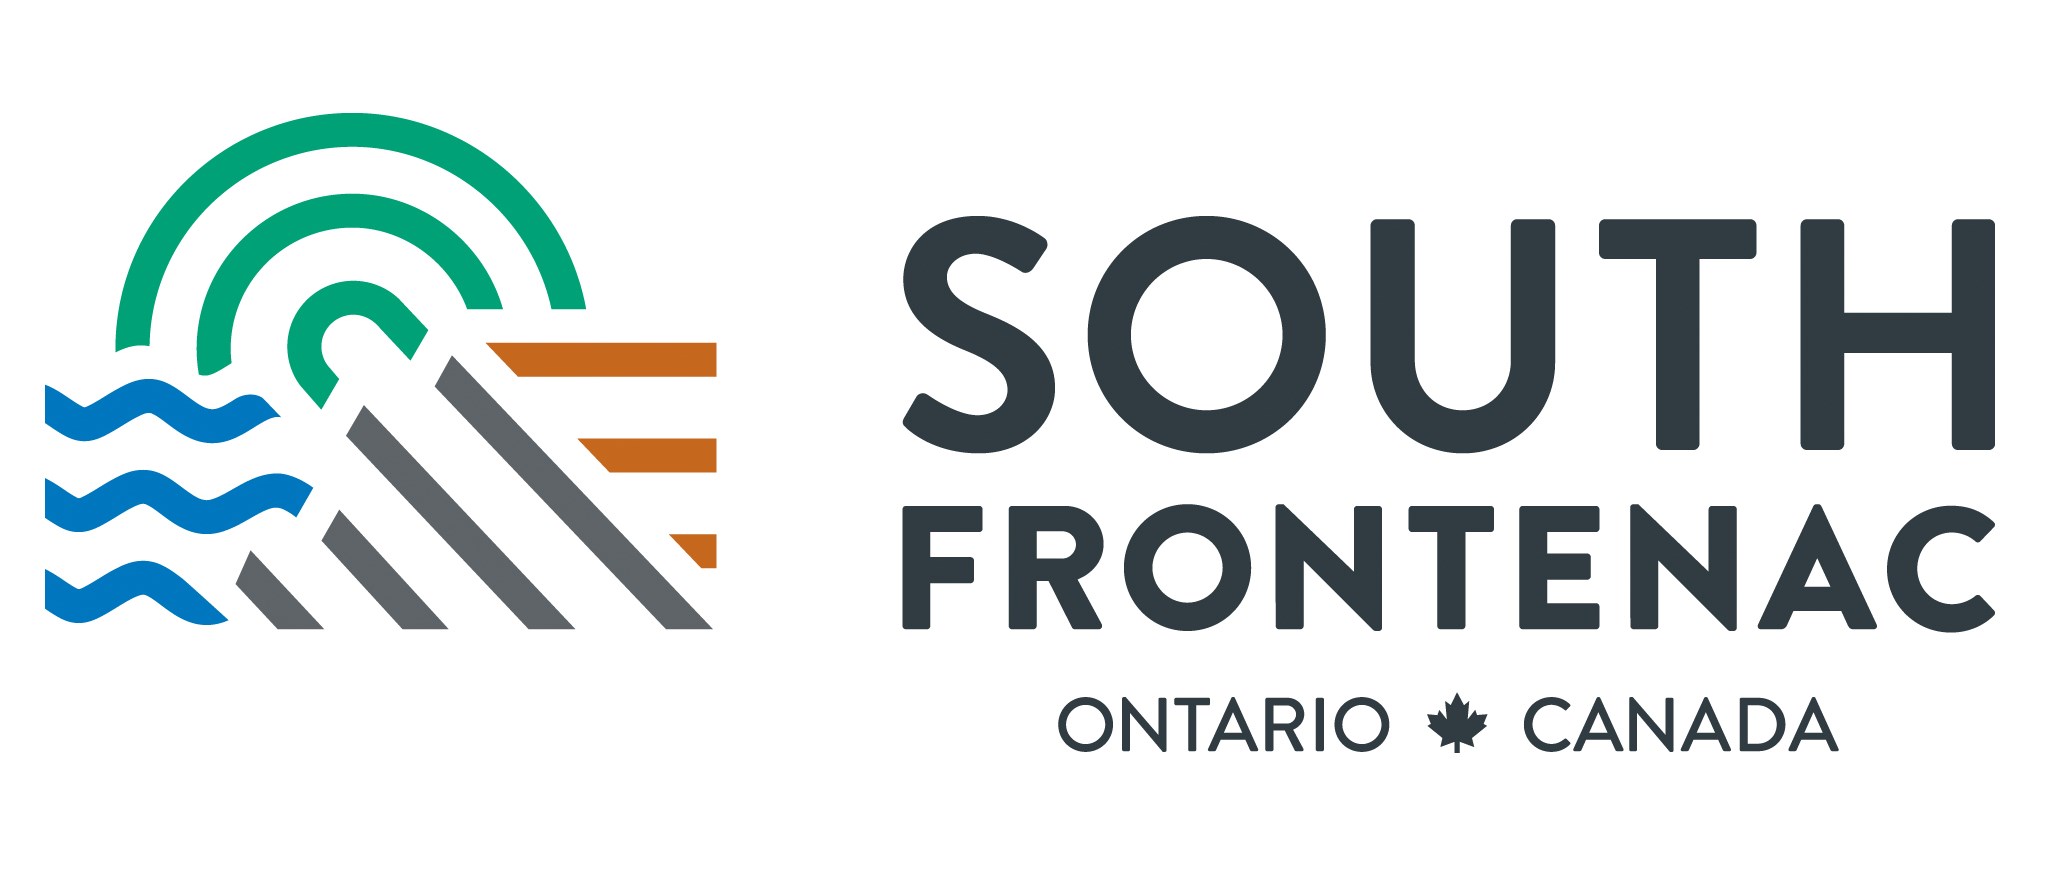 New South frontenac logo 